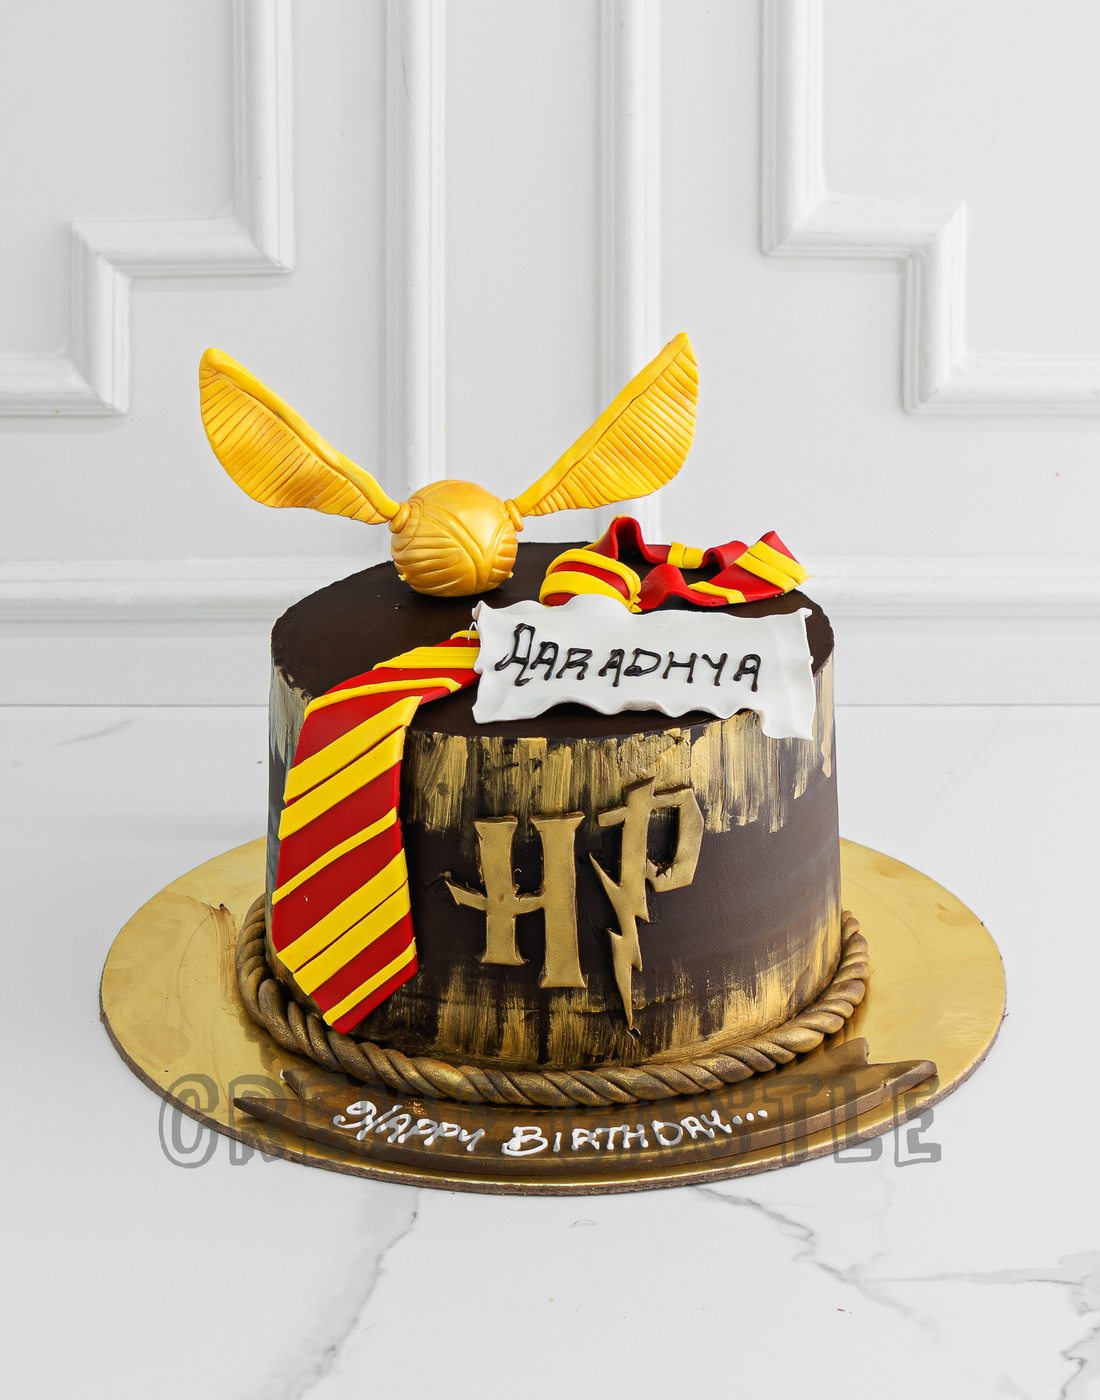 Harry Potter Cake | Harry potter cake, Themed birthday cakes, Cake